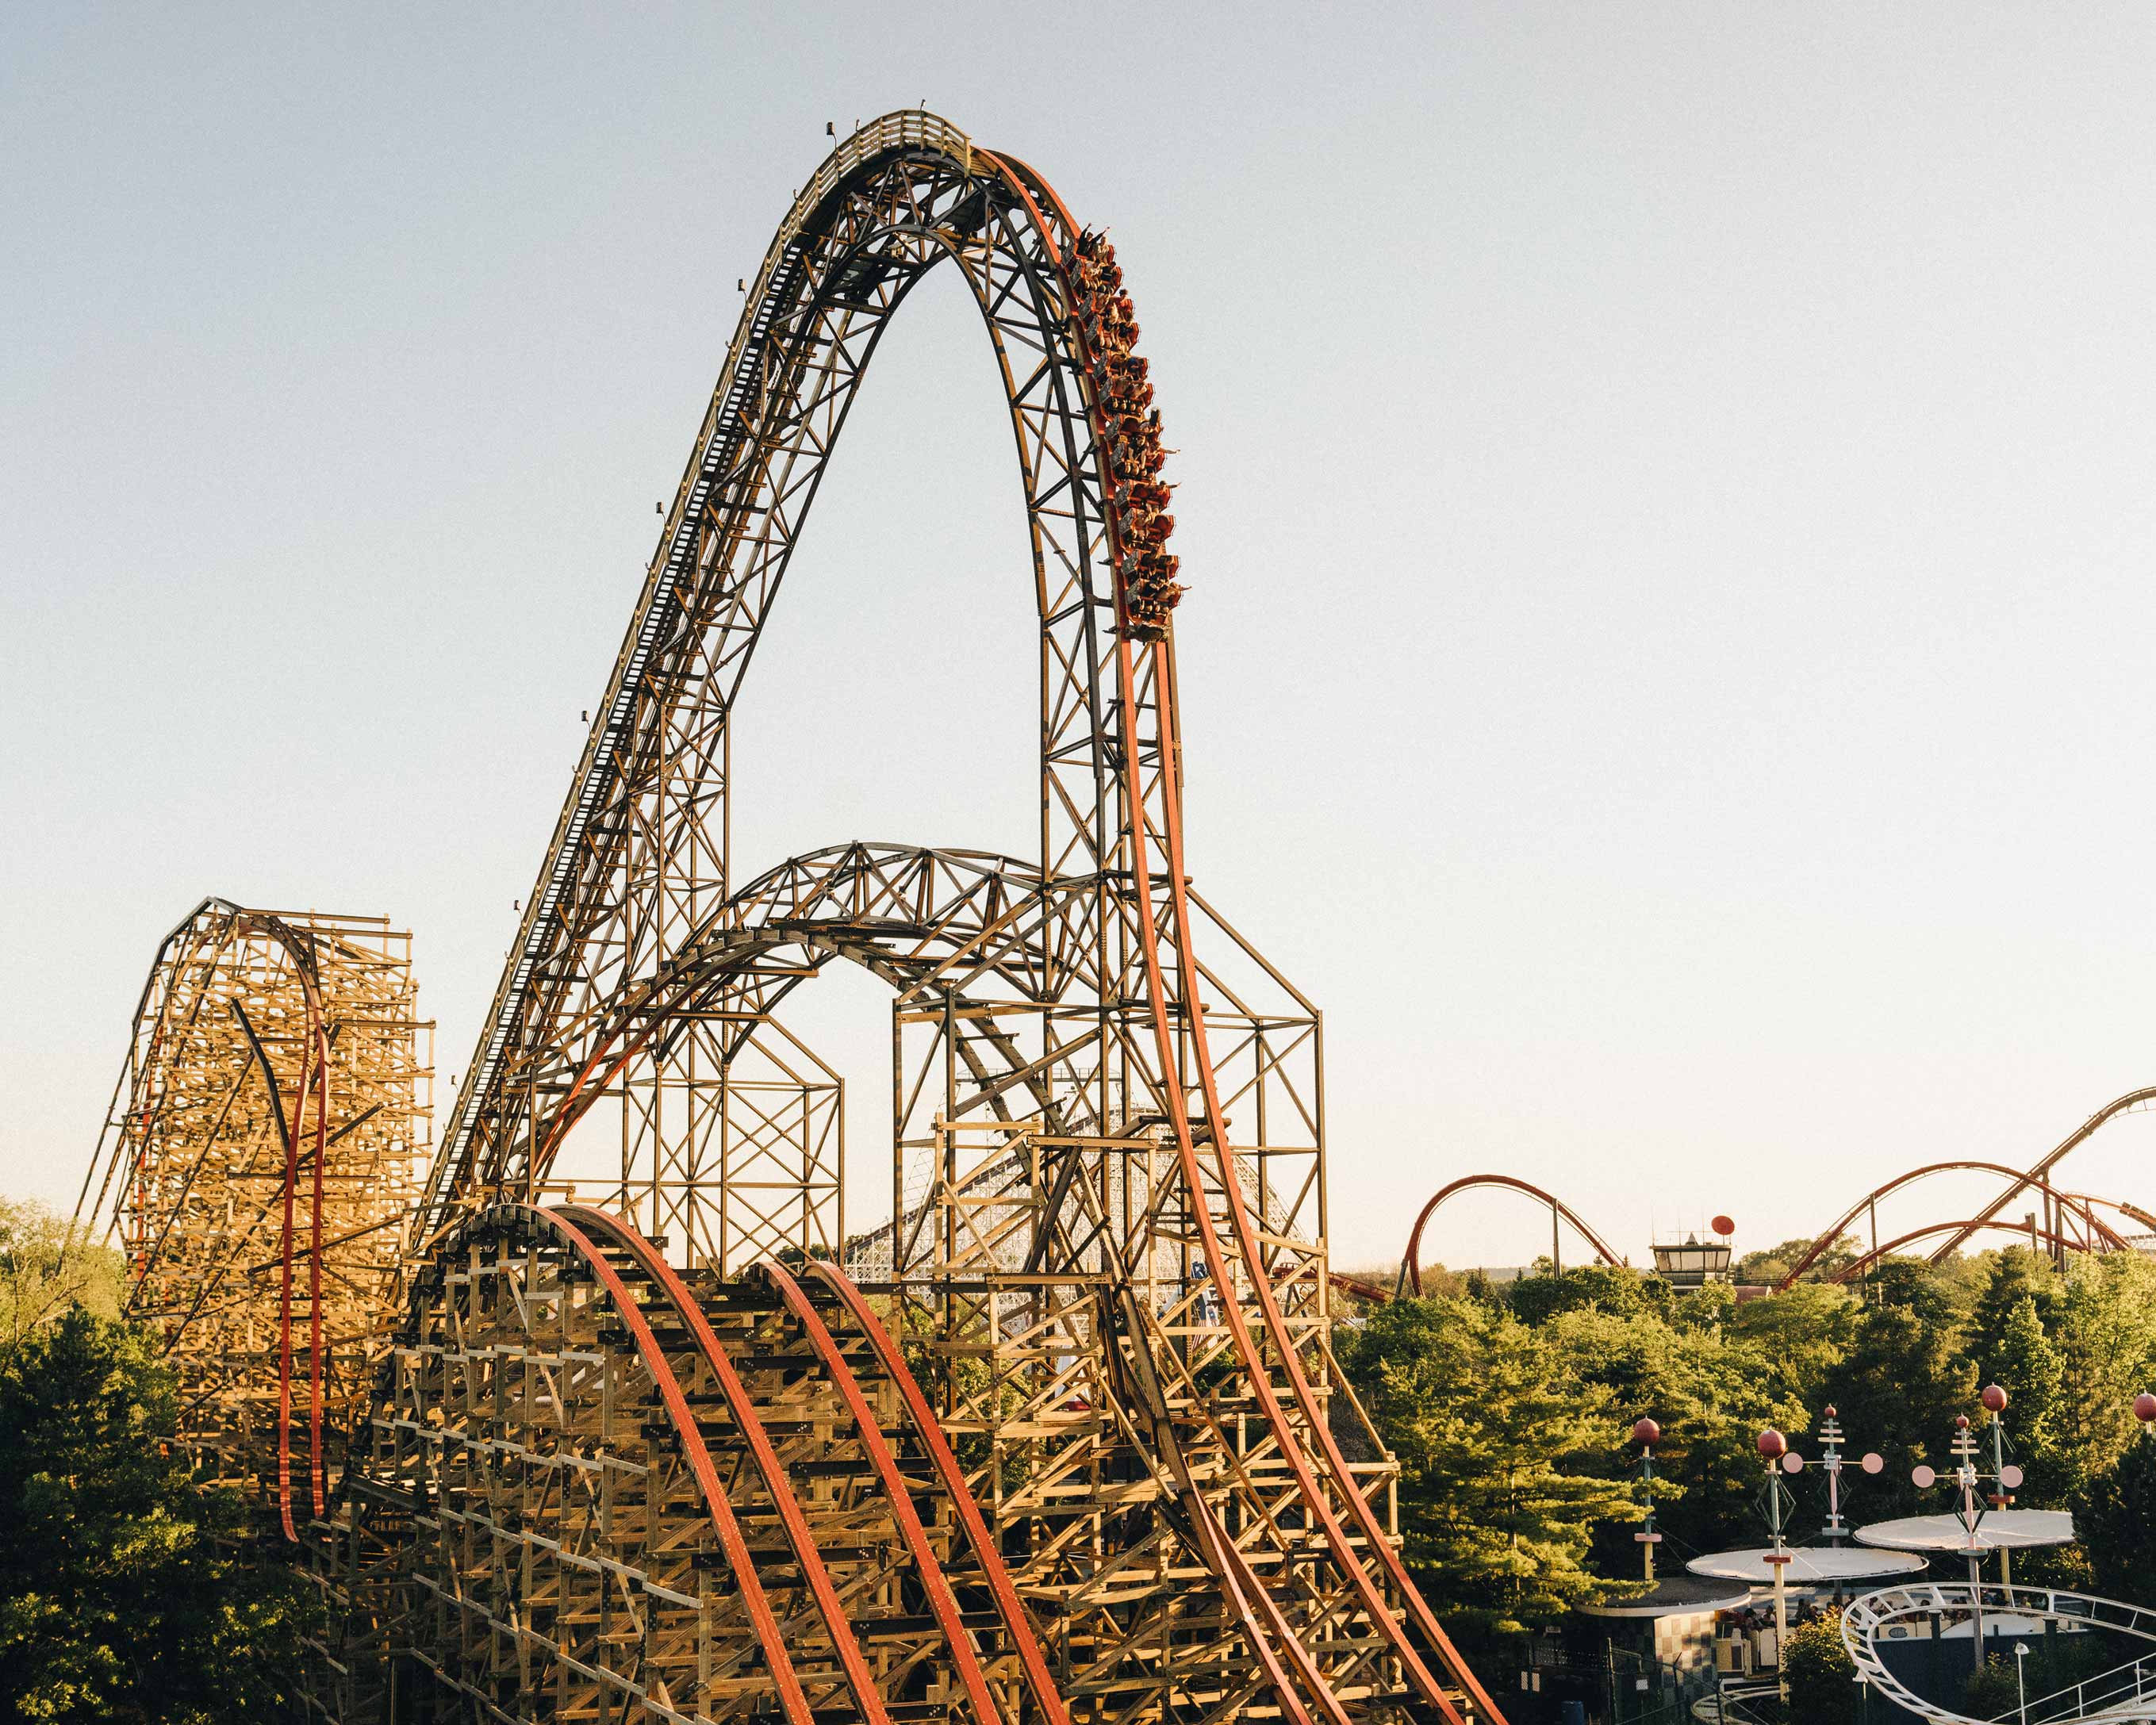 Goliath Rollercoaster Six Flags Gurnee Illinois